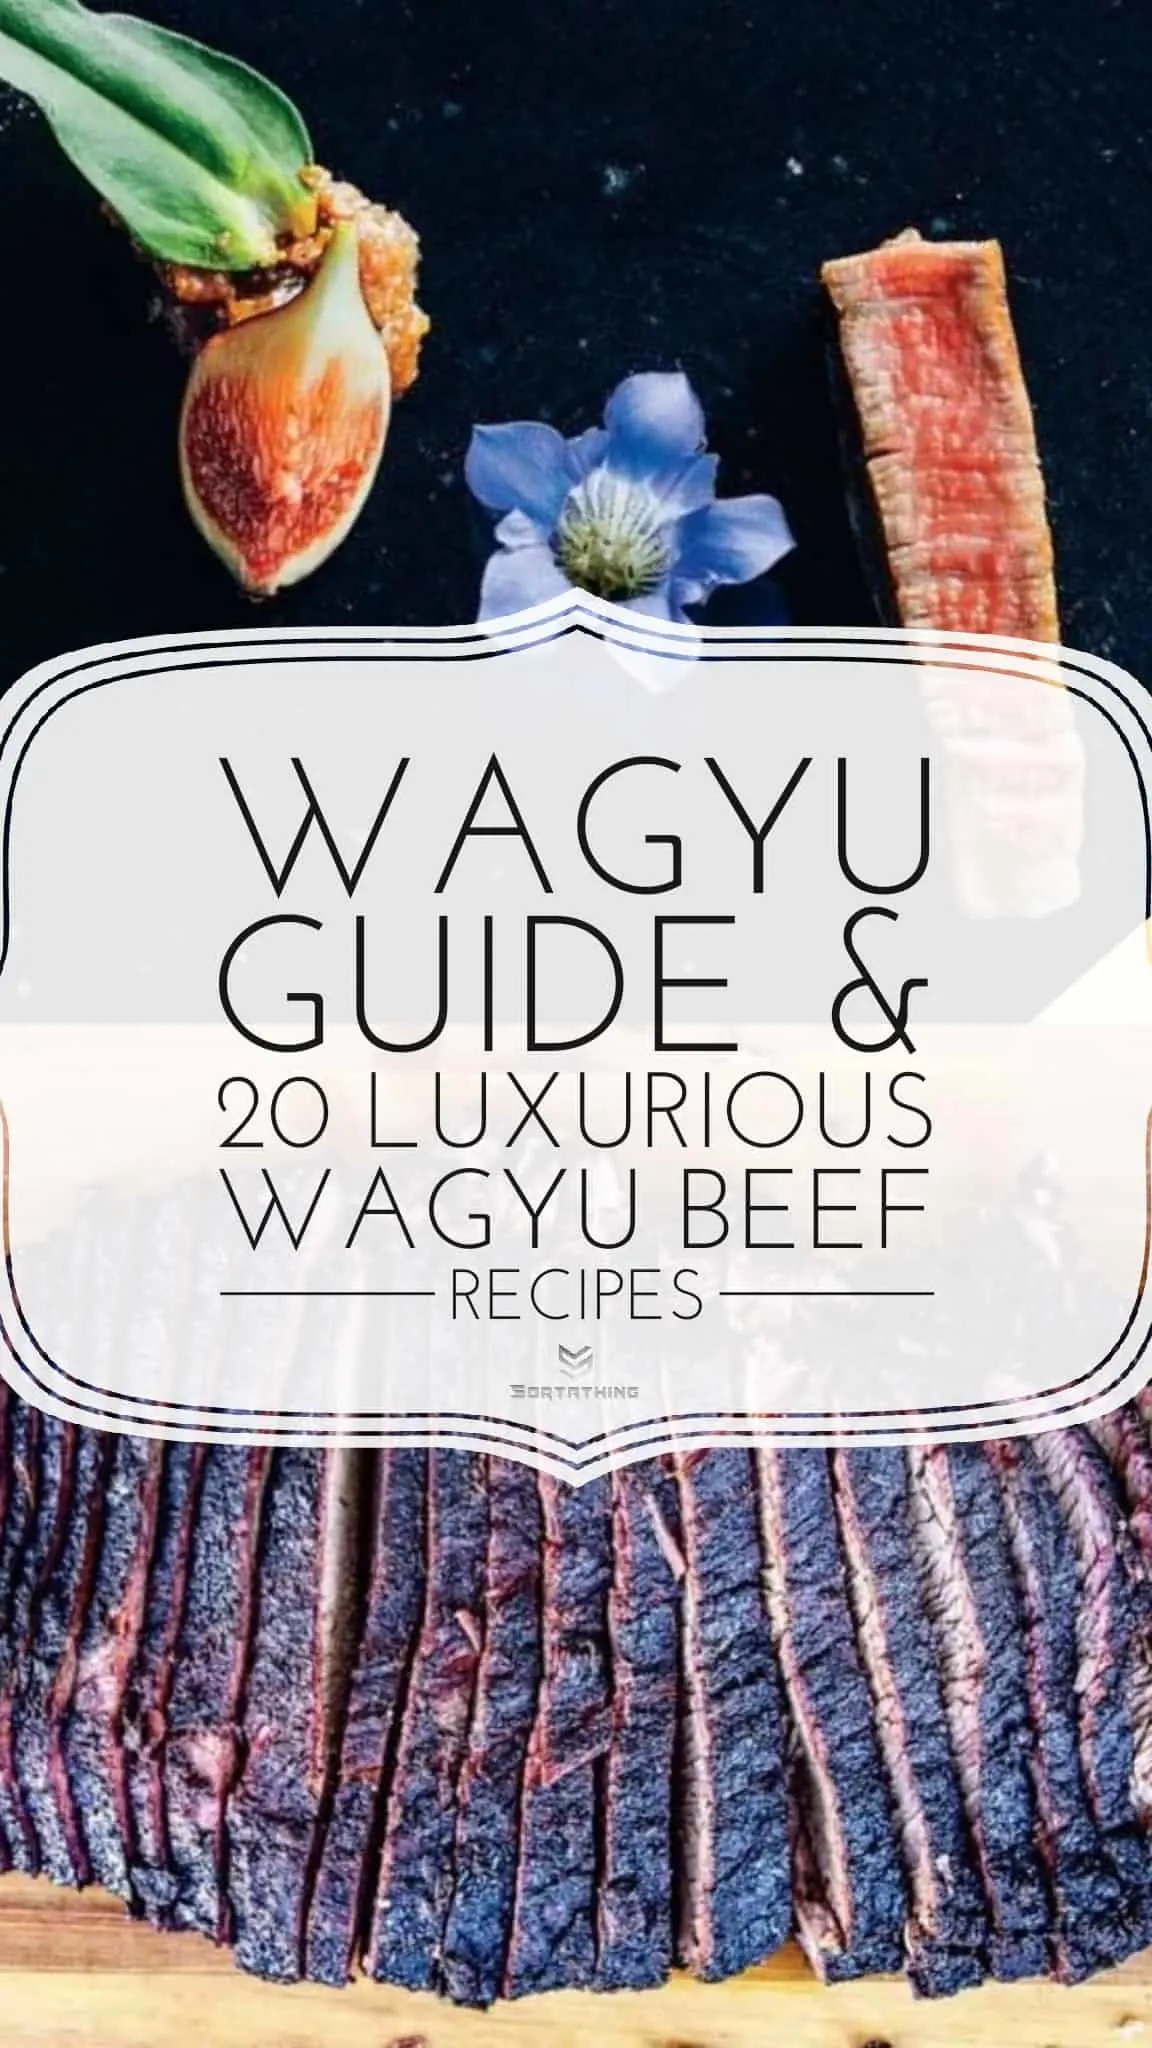 Grilled Wagyu Ribeye with Roasted Fig Miso and Smoked Wagyu Brisket